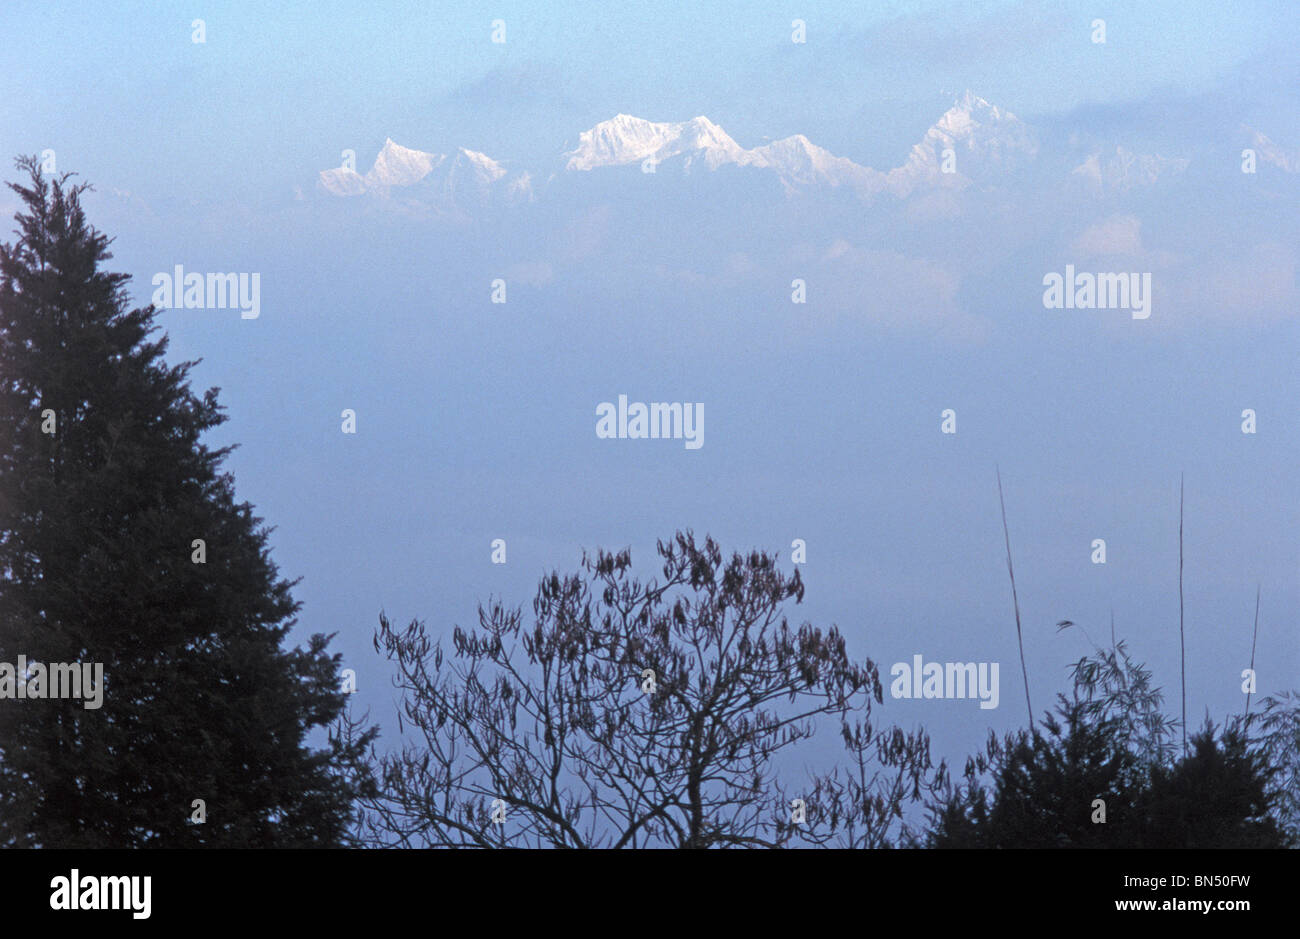 'Daybreak' - Kanchenjunga in the Himalayan mountain range begins to emerge through the early morning mist. Stock Photo